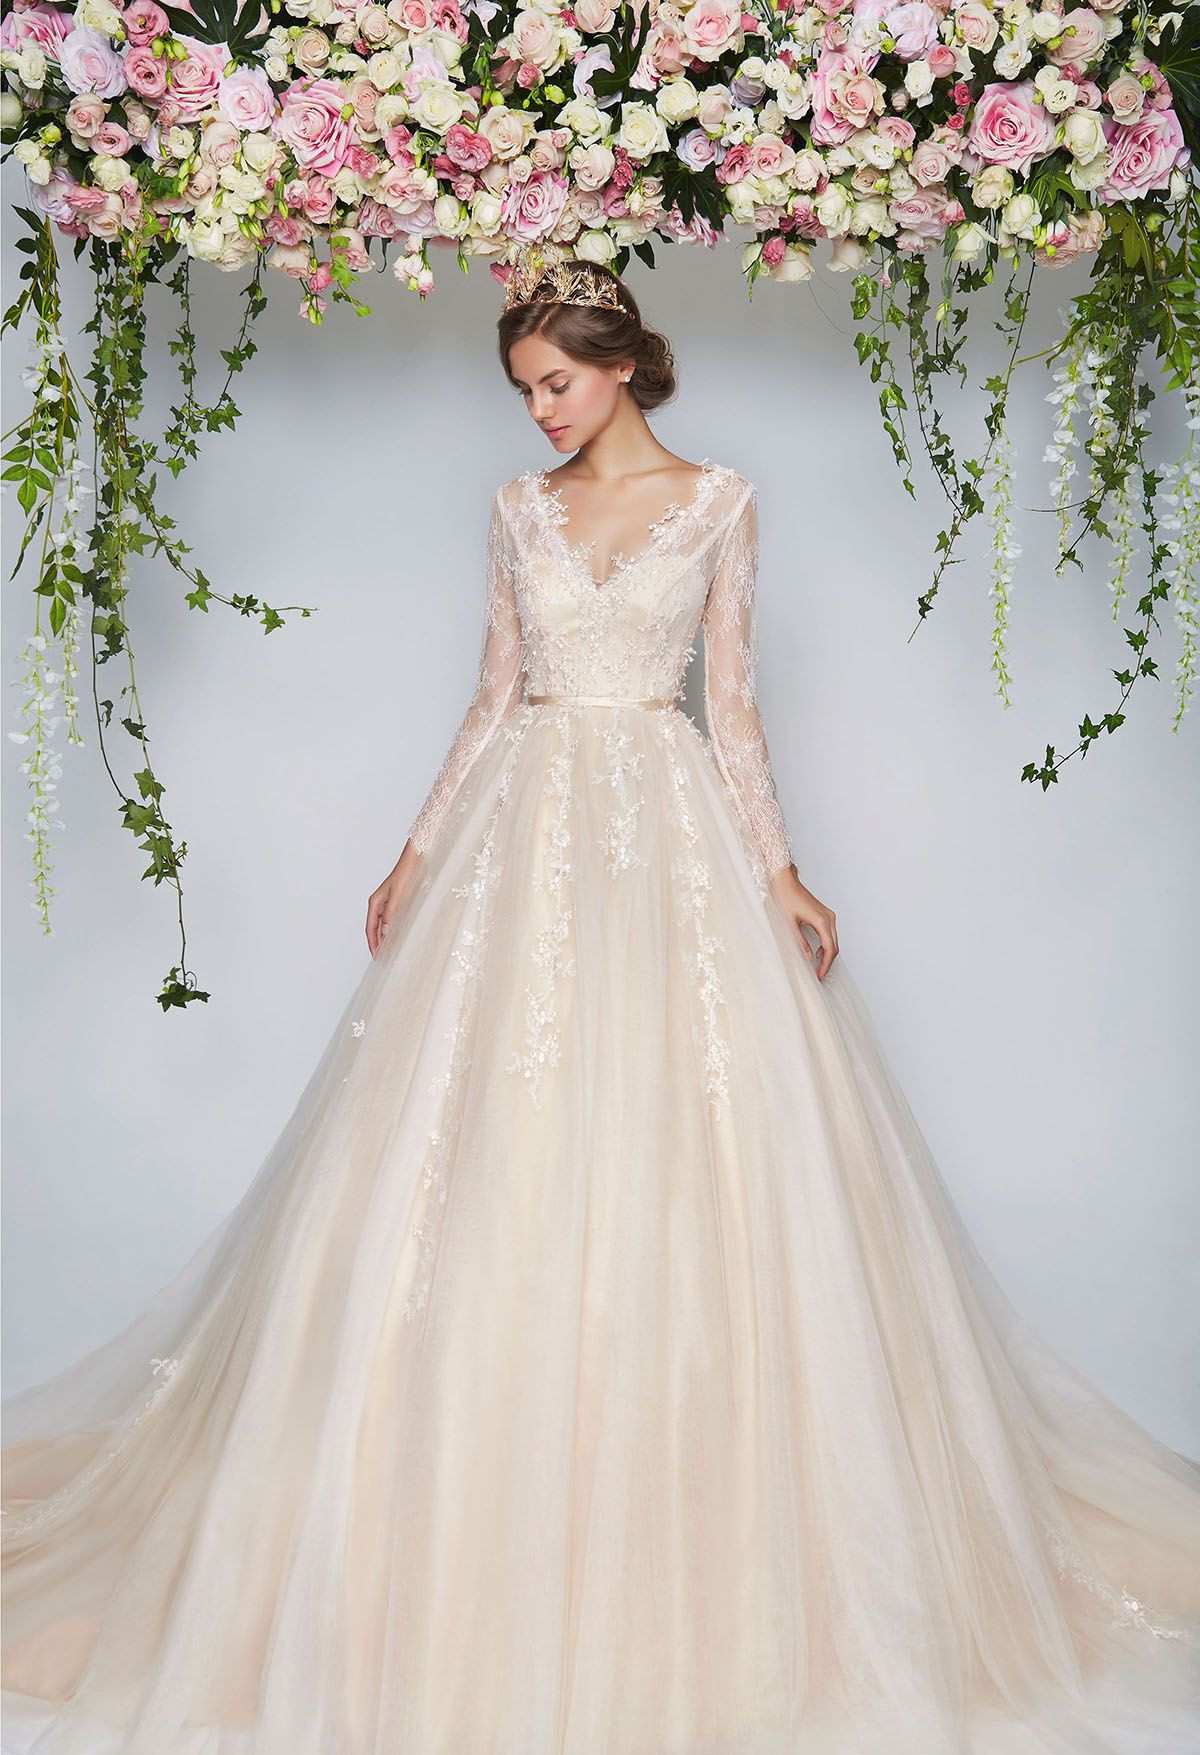 Cream Wedding Dresses
 Best 25 Cream ball dresses ideas on Pinterest